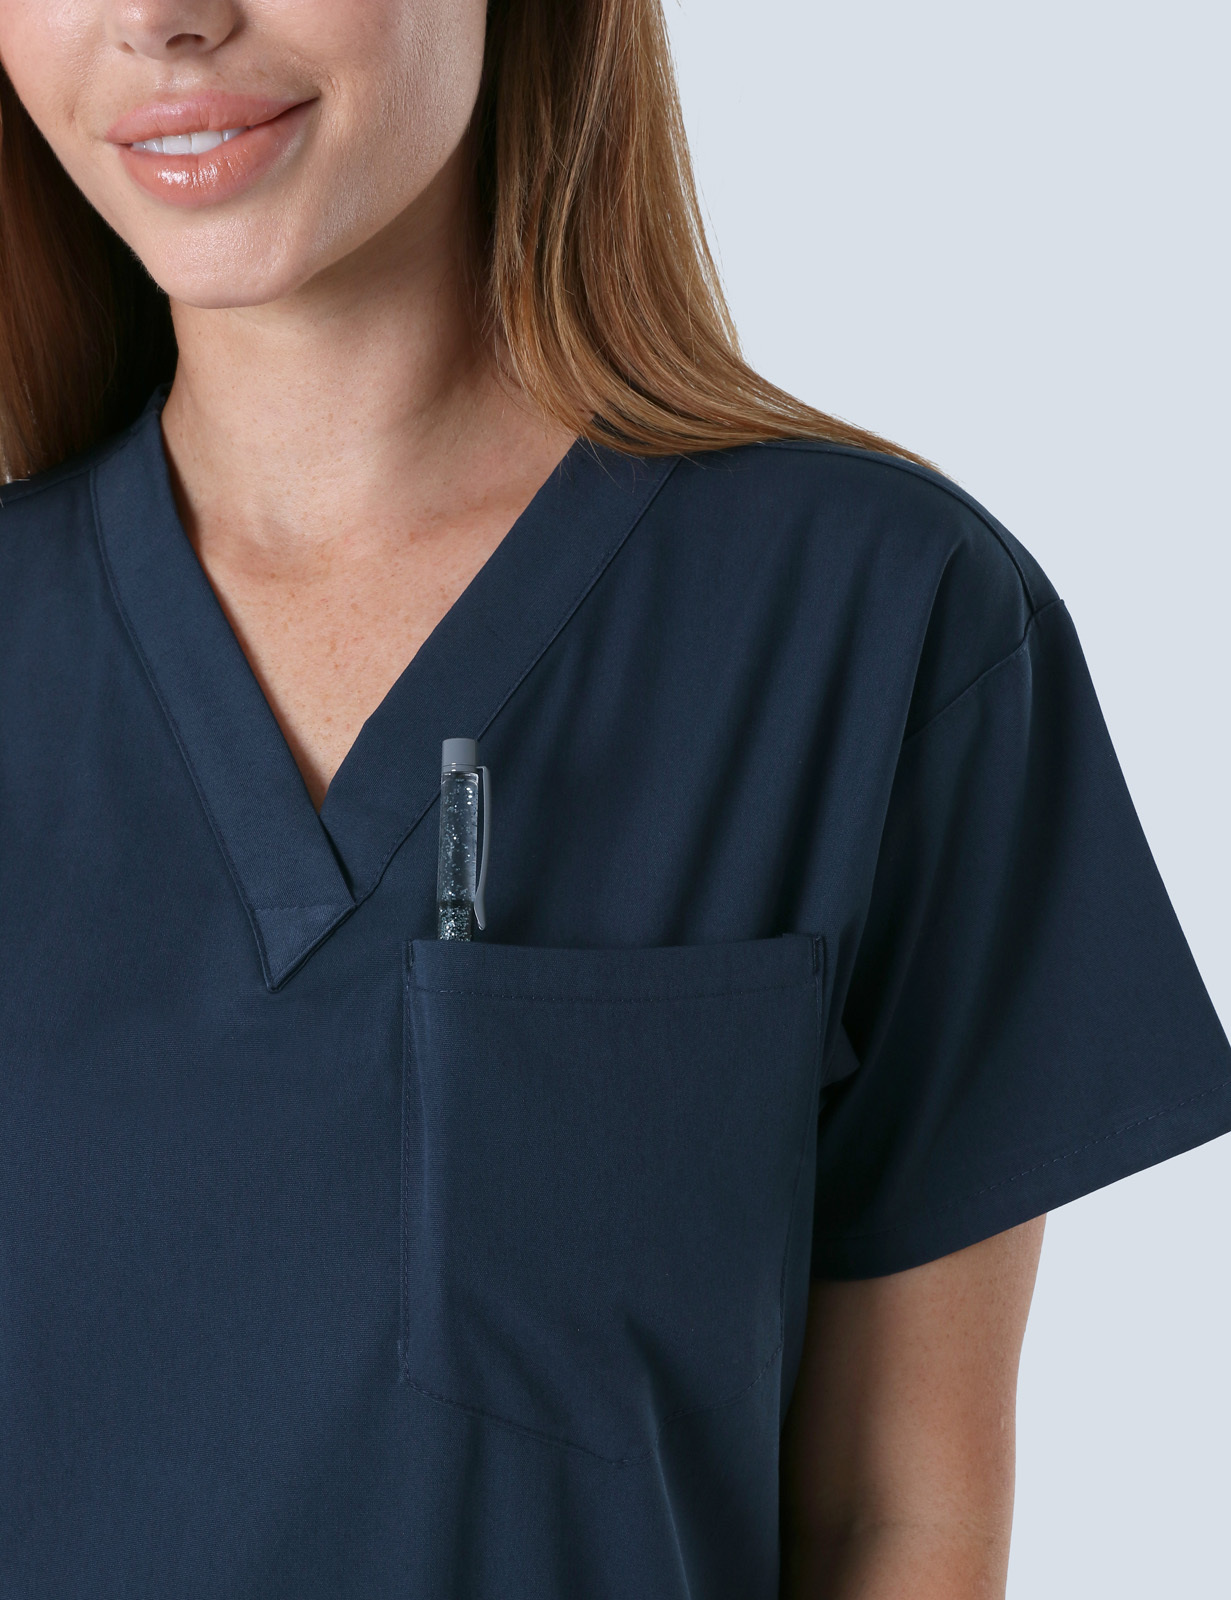 Caloundra Hospital - Registered Nurse (4 Pocket Scrub Top and Cargo Pants in Navy incl Logos)